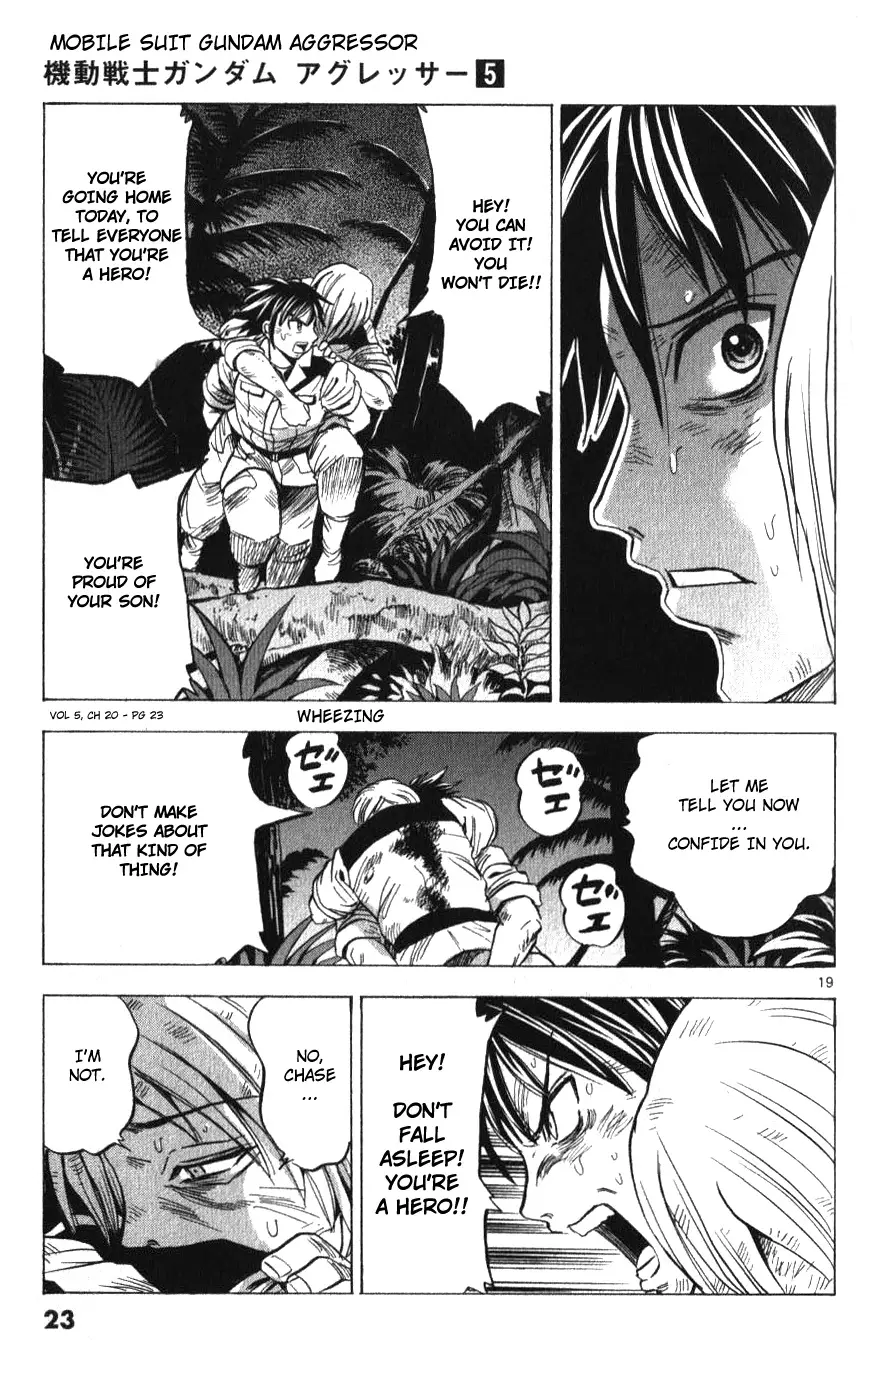 Mobile Suit Gundam Aggressor - 20 page 20-54e3801d